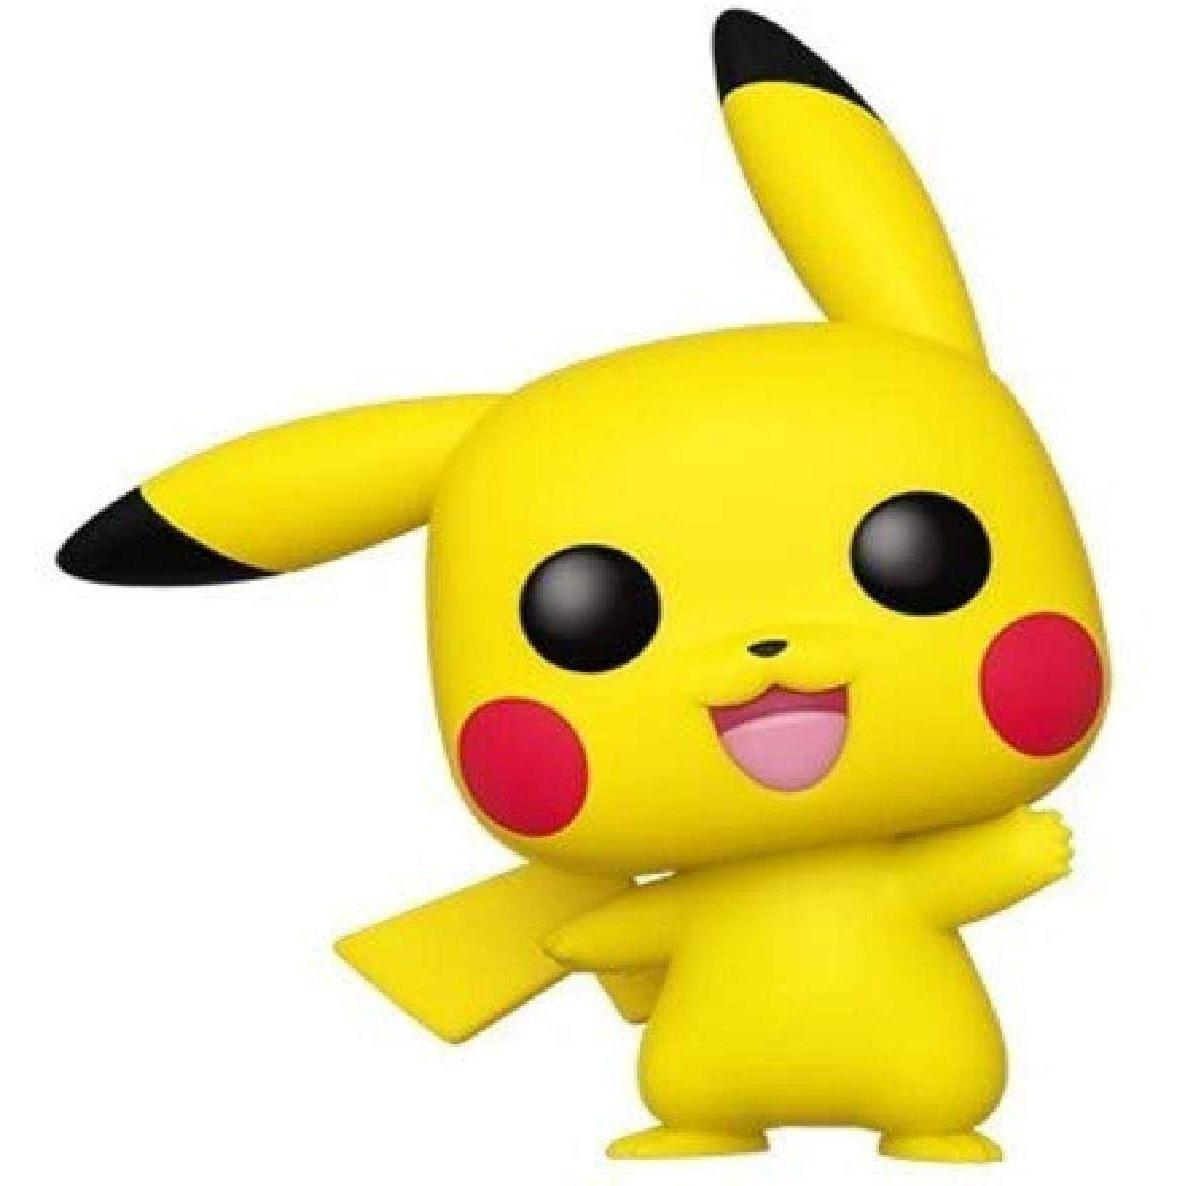 Funko POP Pokemon Pikachu Waving Figure for $5.99